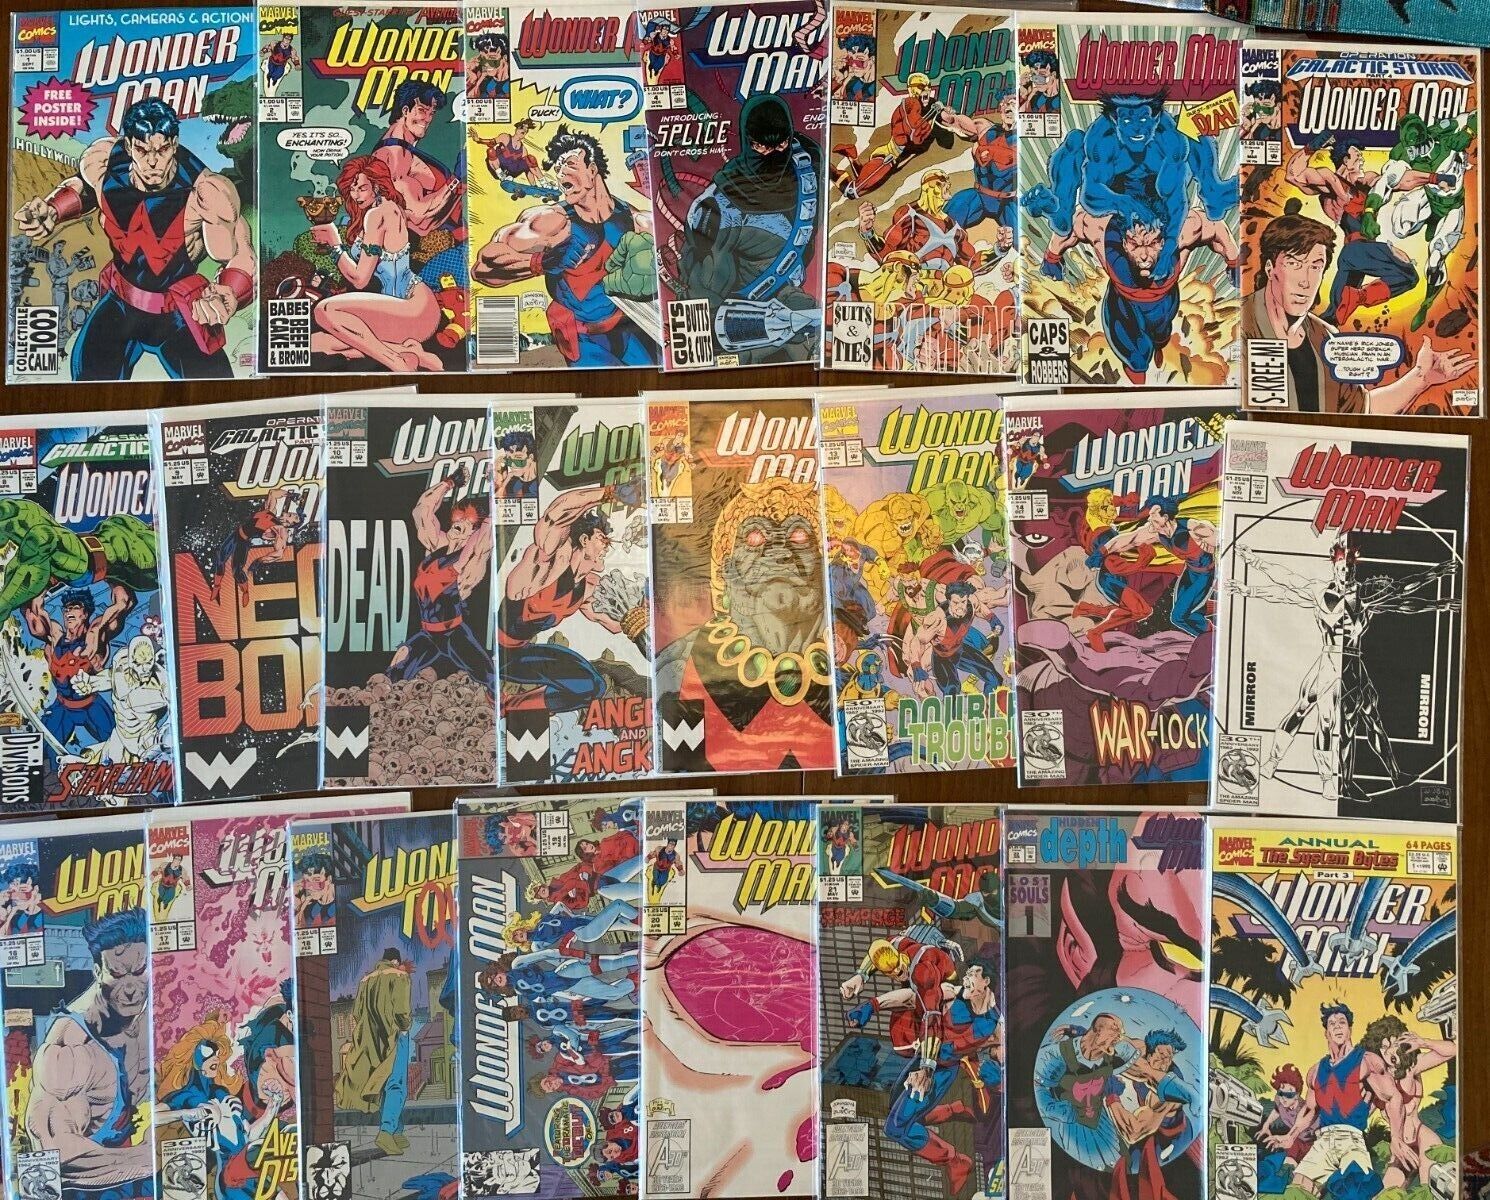 Wonder Man (Marvel Comics, 1991) #1-22 + Annual #1) - VF Condition